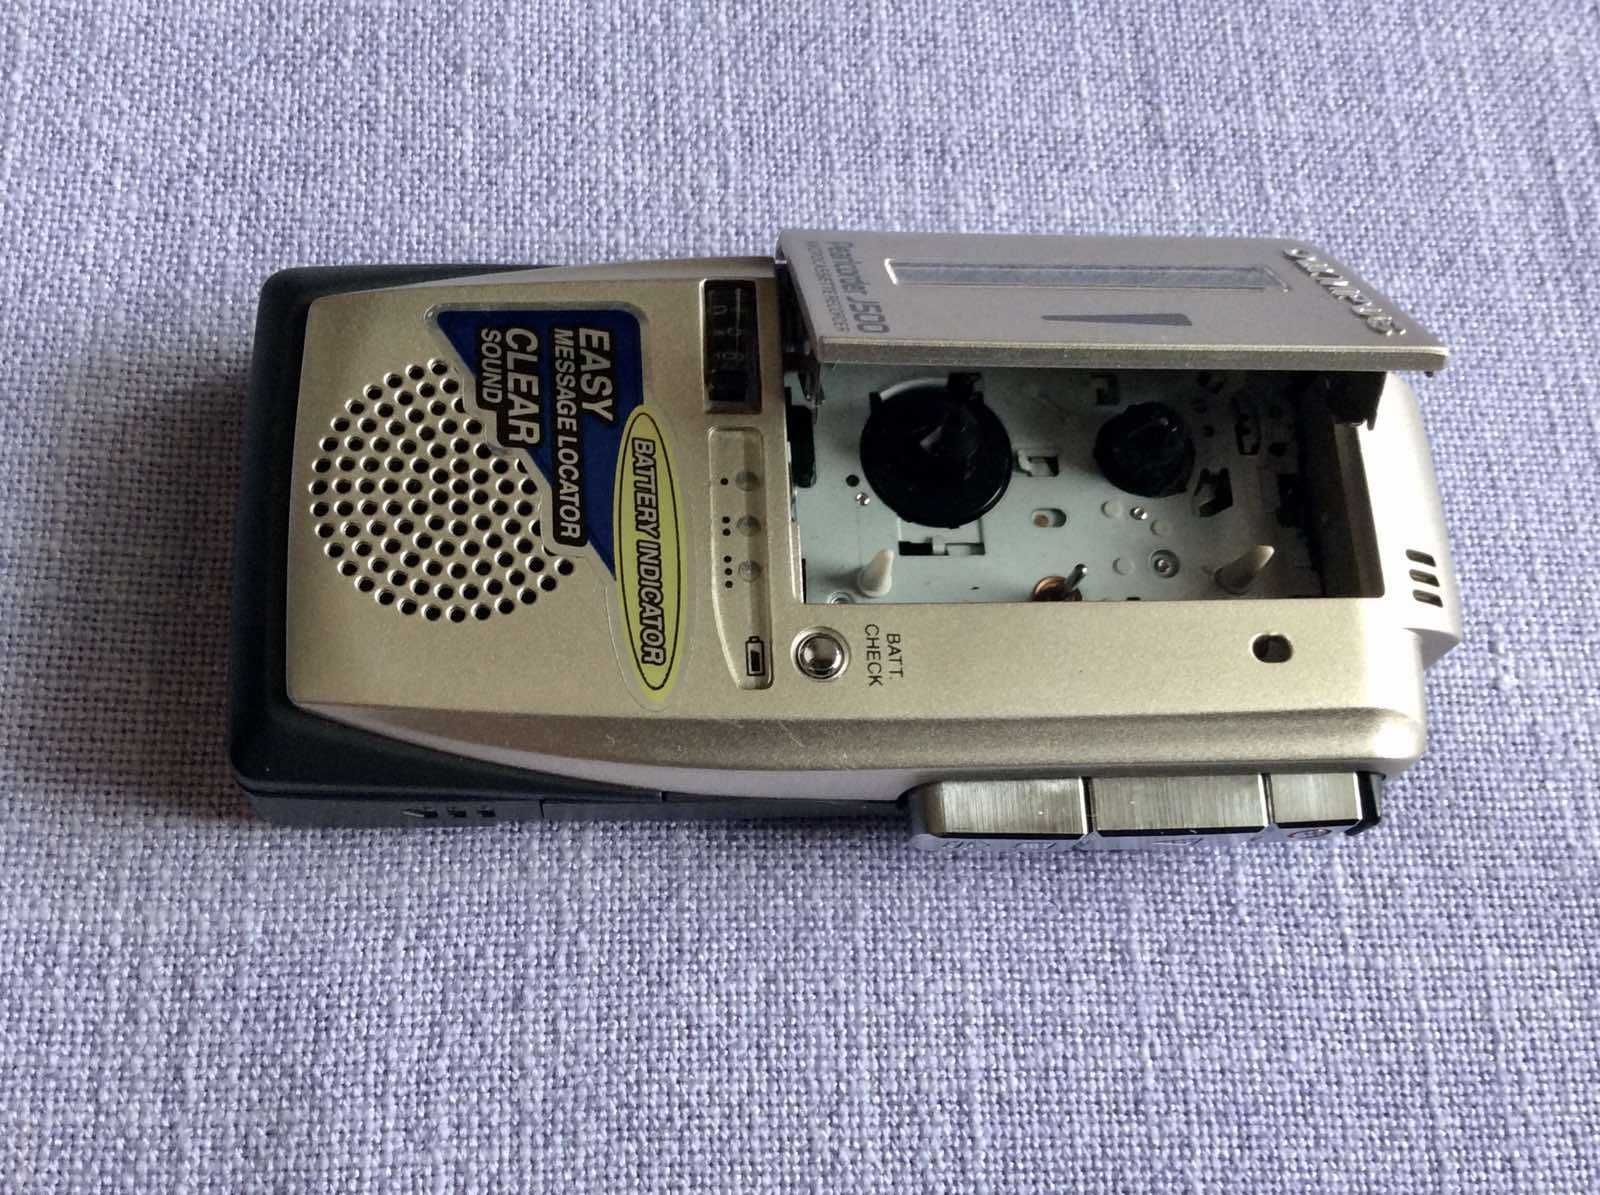 диктофон Олимпус - Pearlcorder J 500 + касети